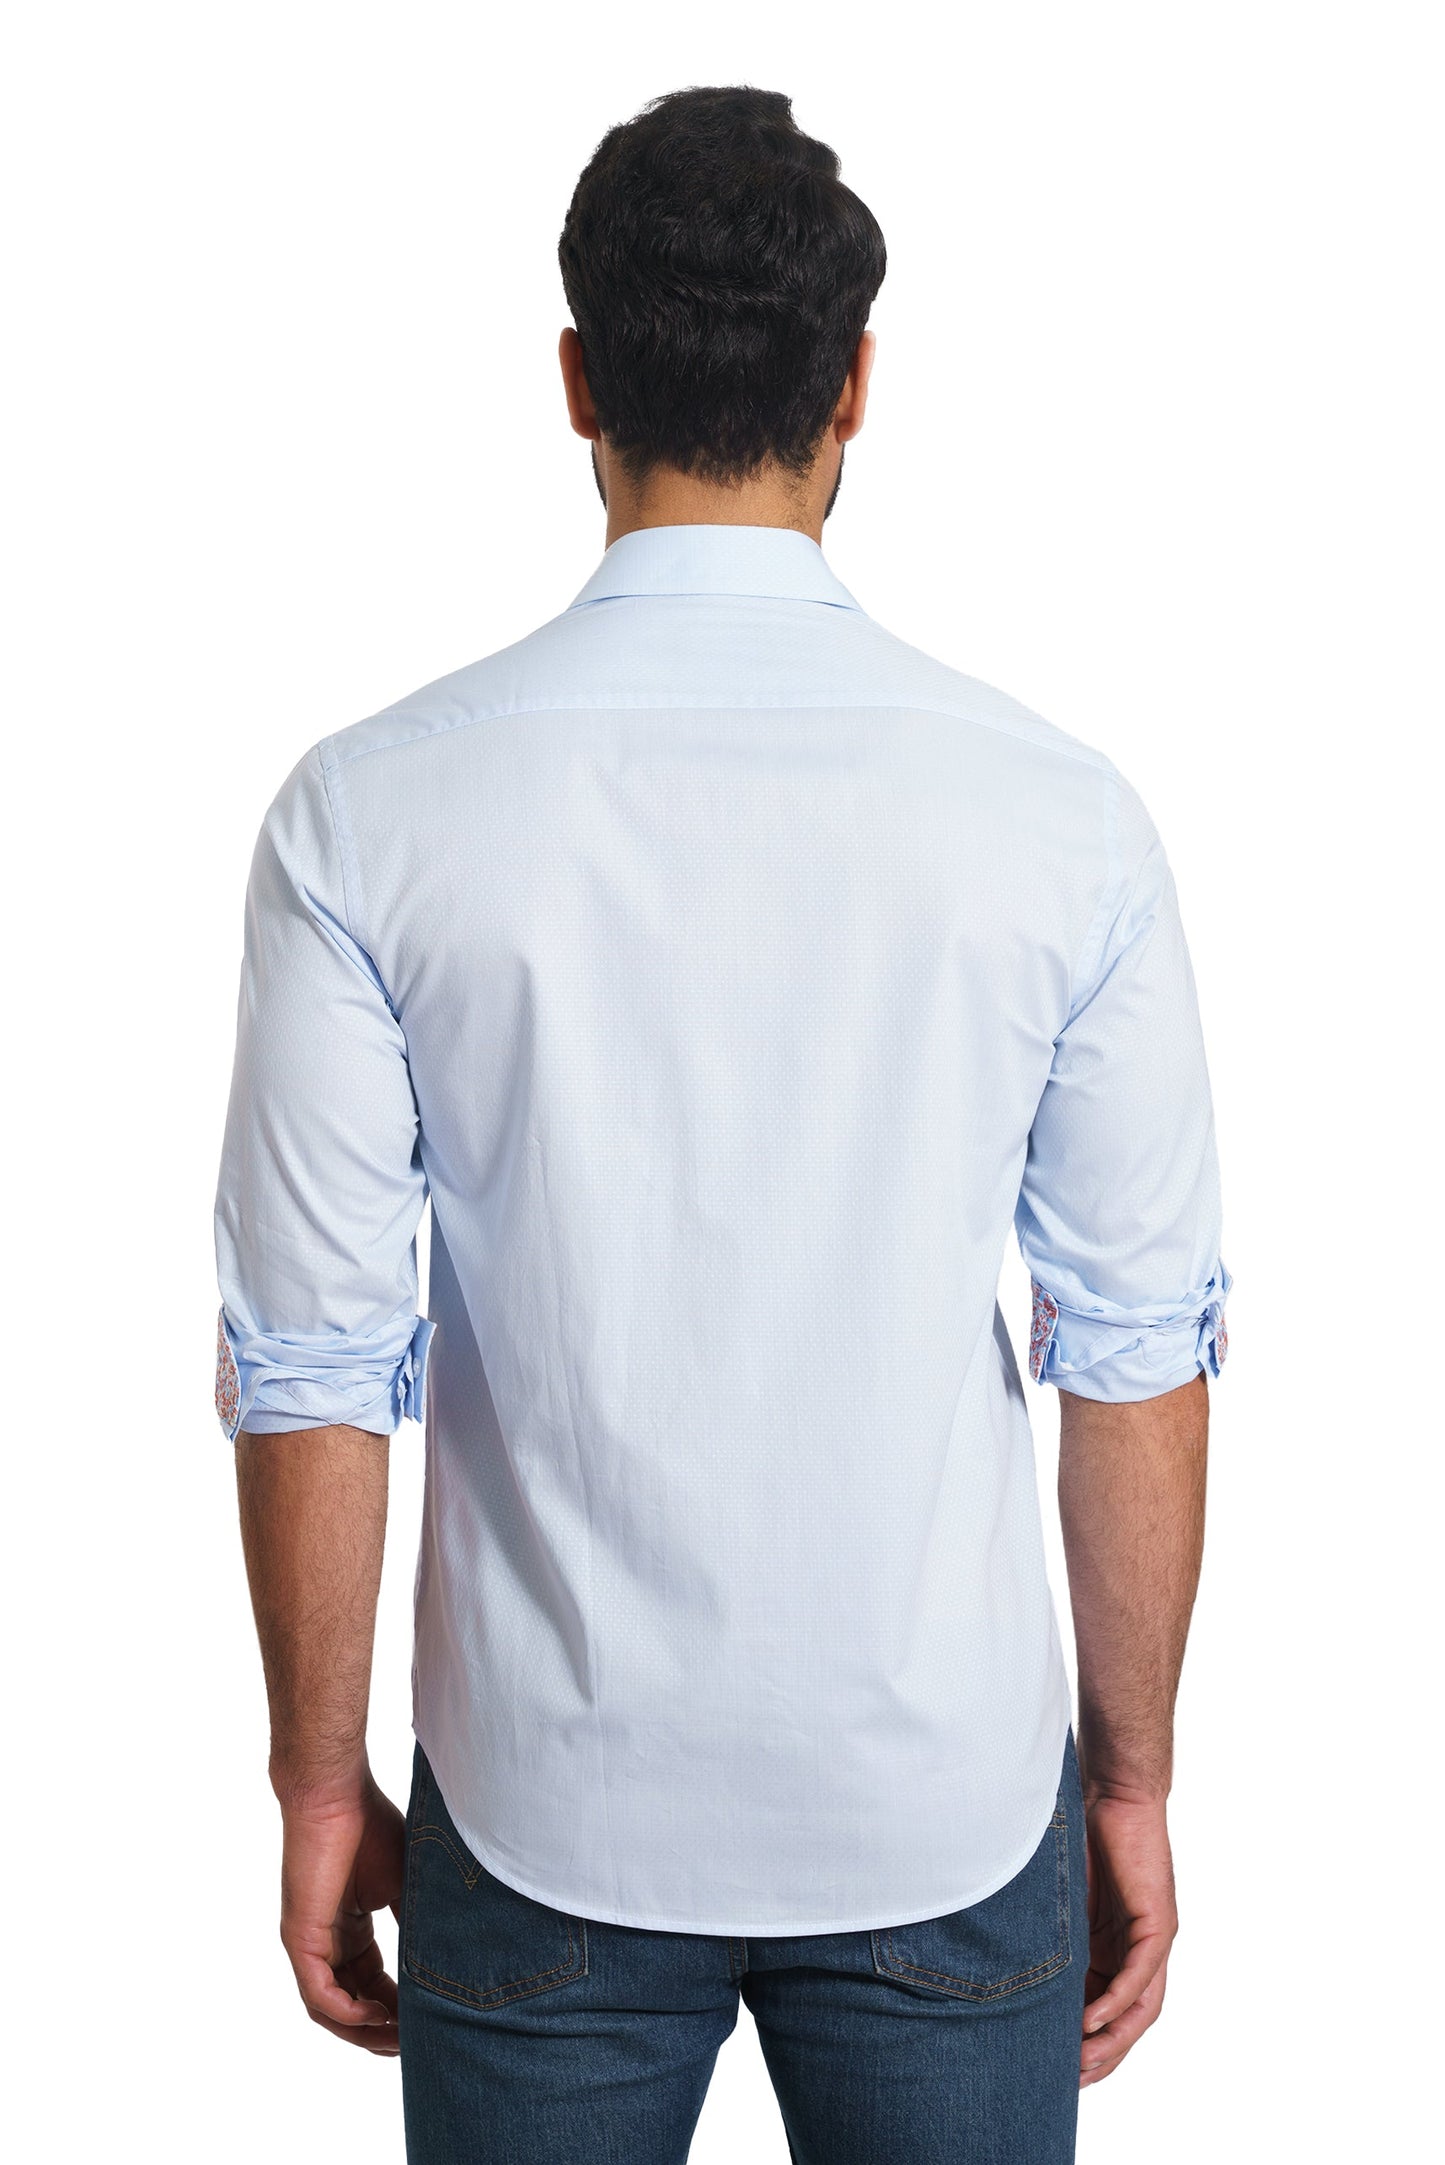 Baby Blue Long Sleeve Shirt TP-7153 Back